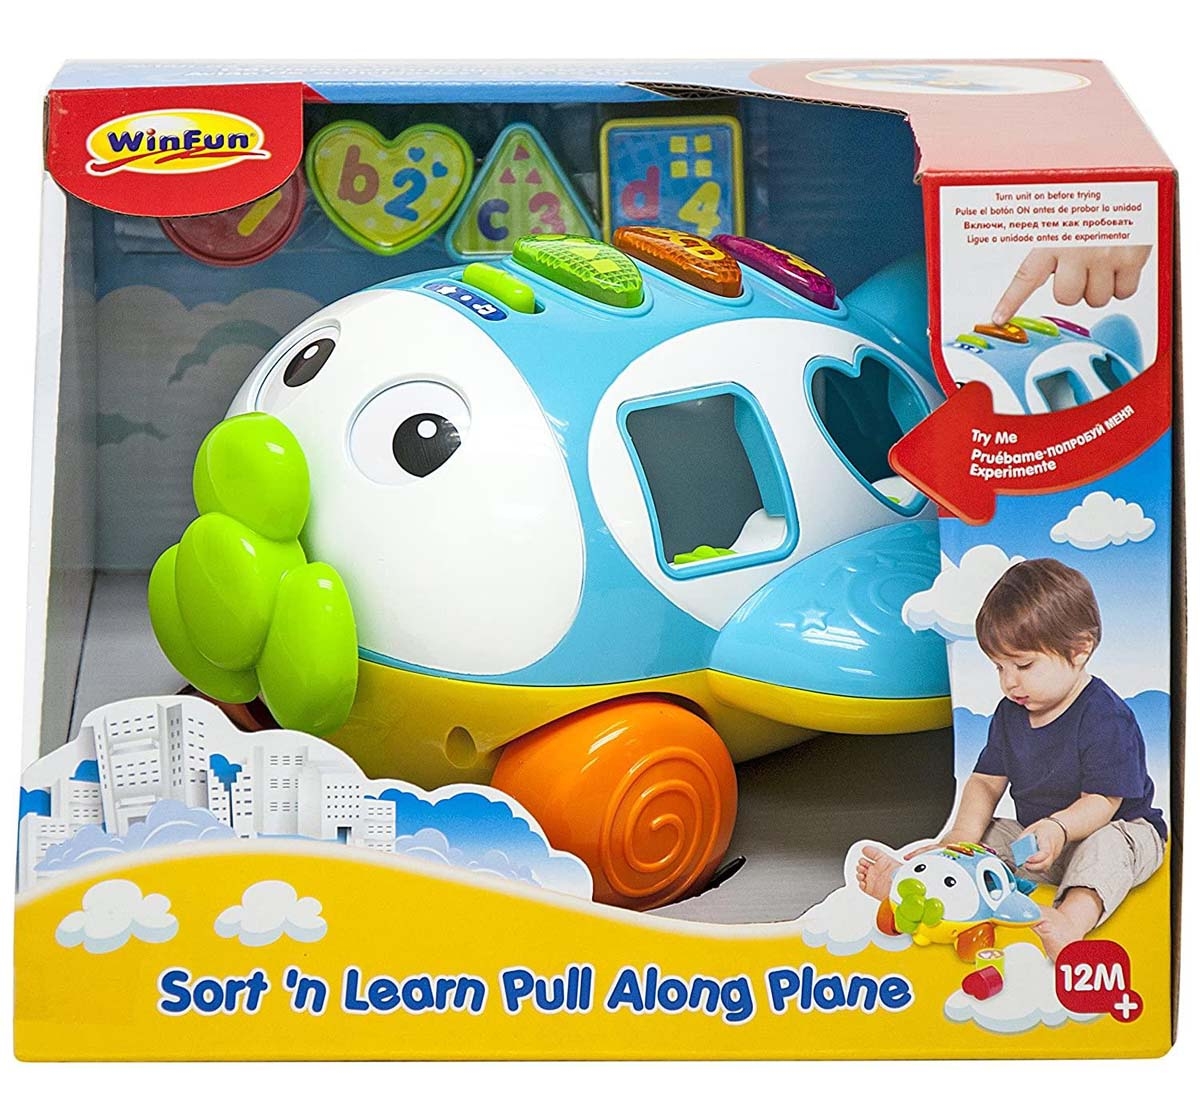 WinFun | Winfun Sort Fun Learn Pull Along Plane Learning Toys for Kids Age 12M+